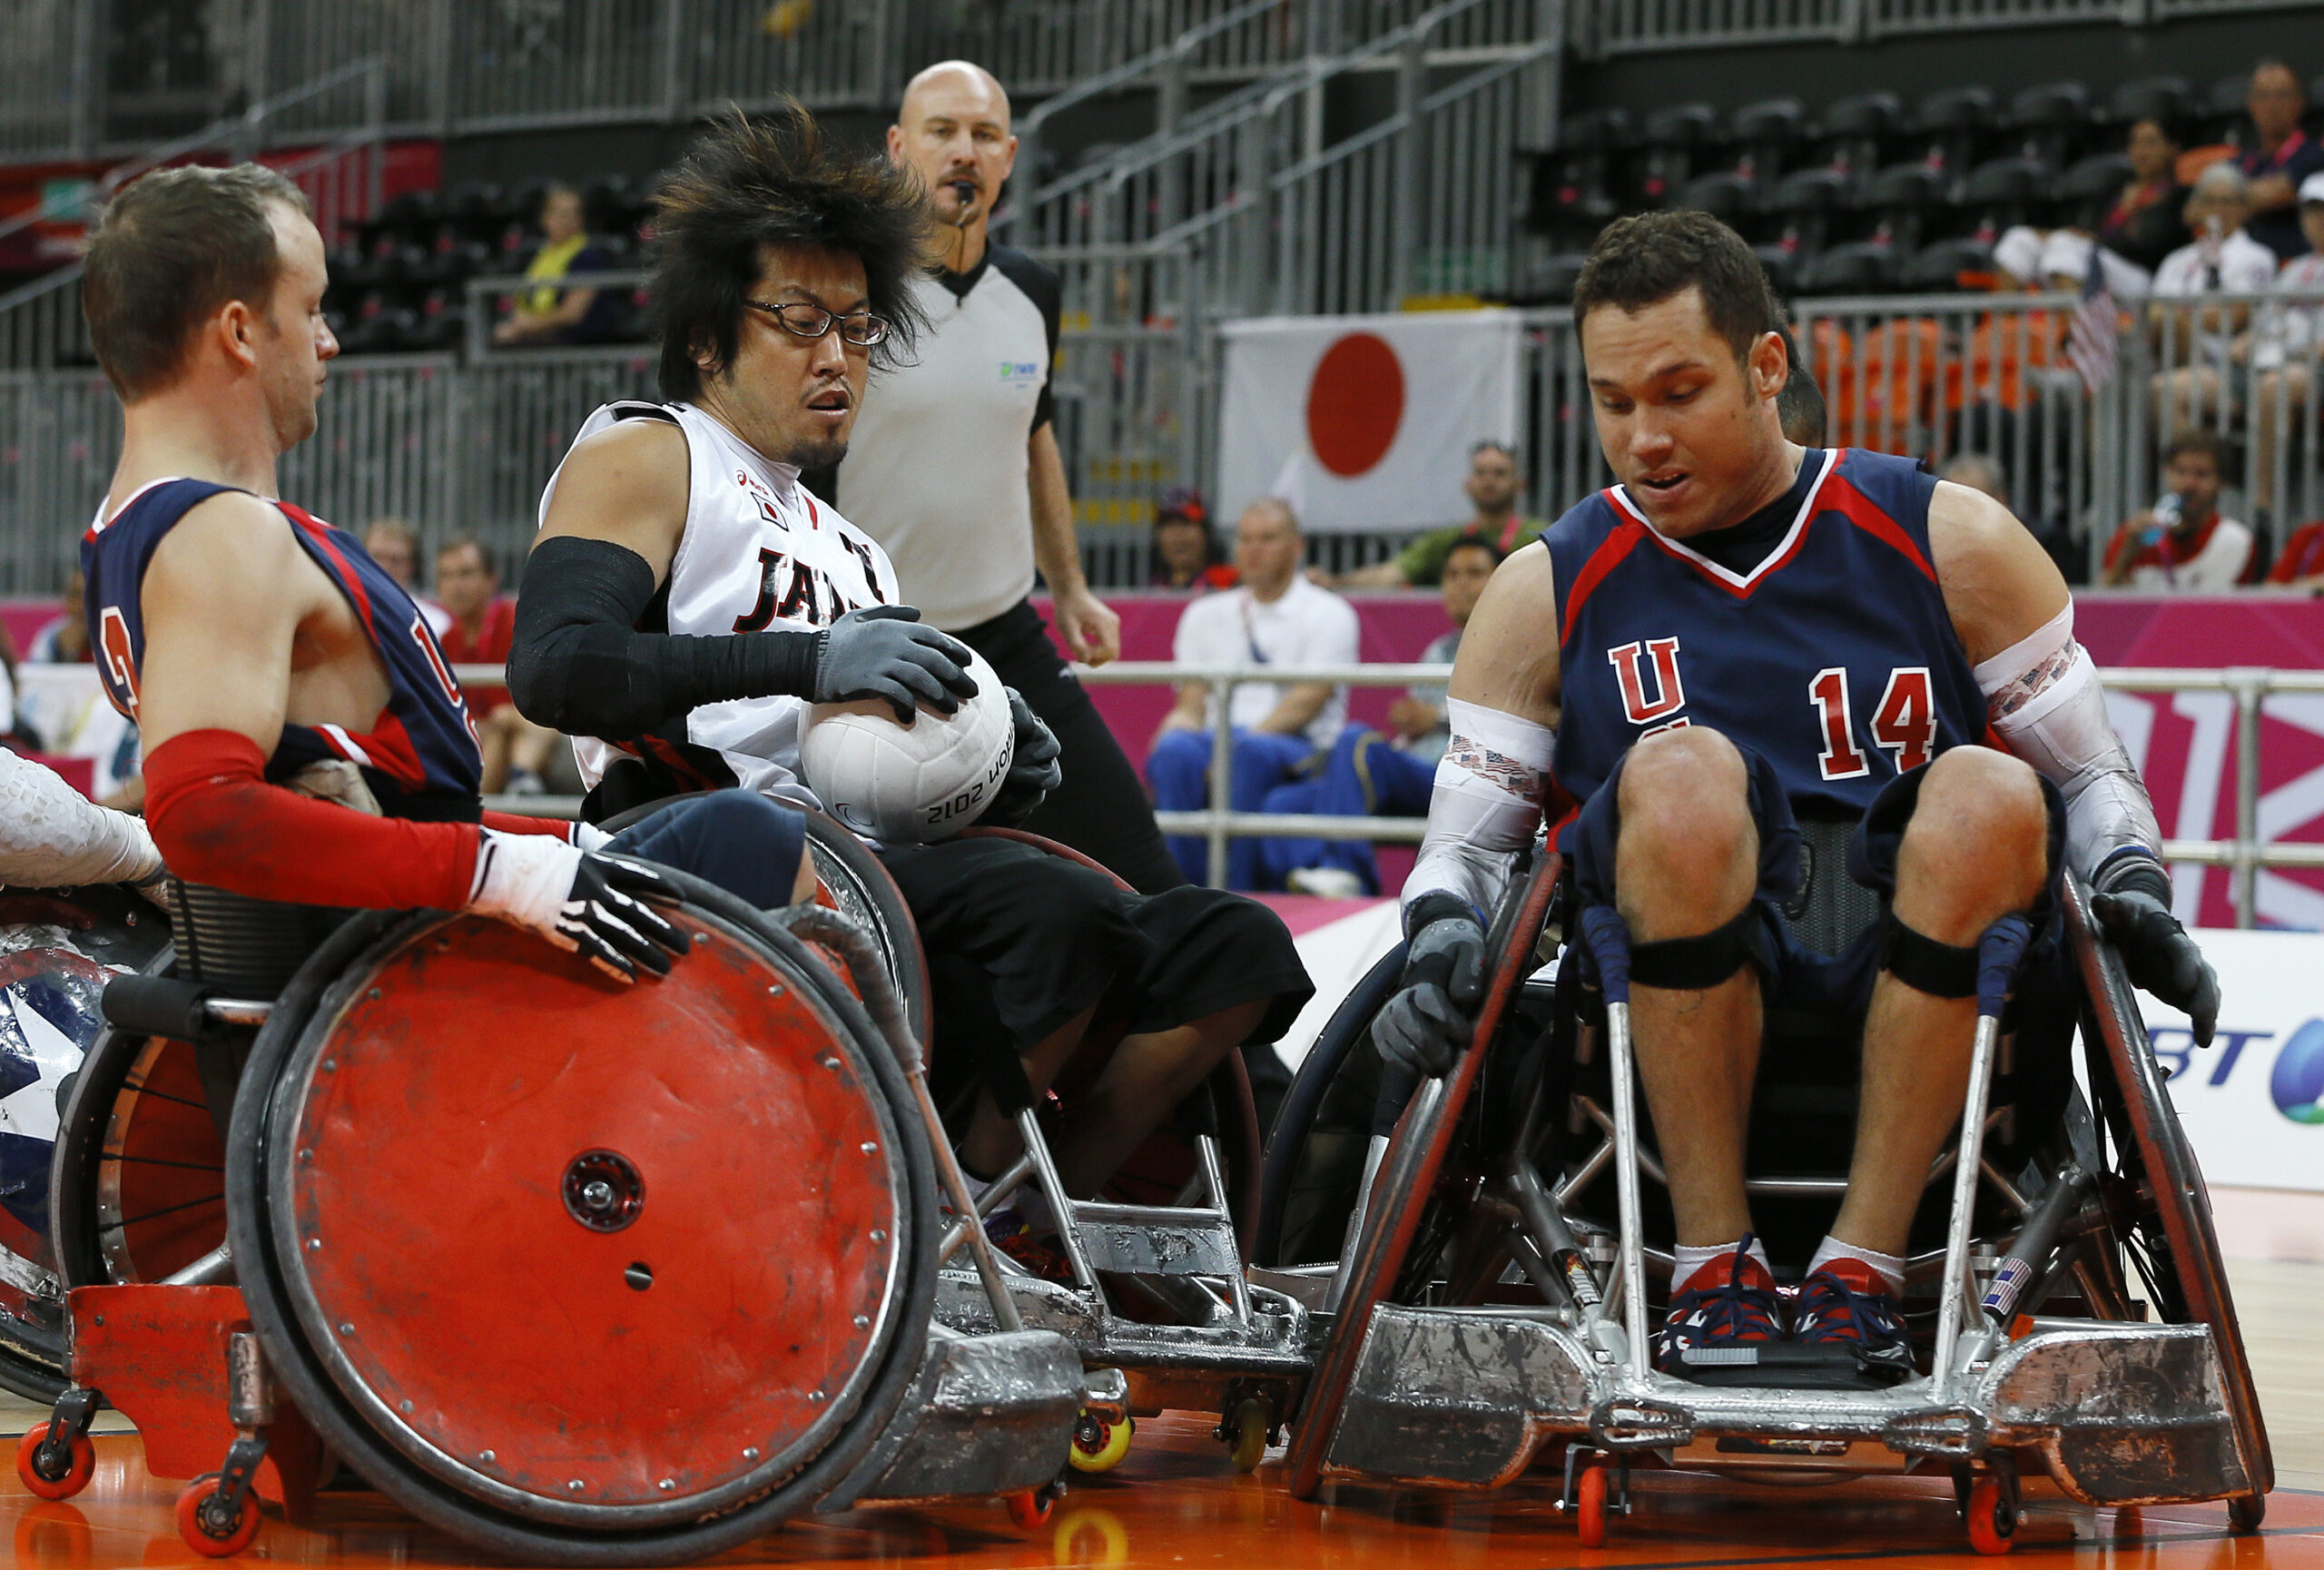 Derrick Helton and Joe Delagrave of the United States block Daisuke Ikezaki's attempt to score for Japan